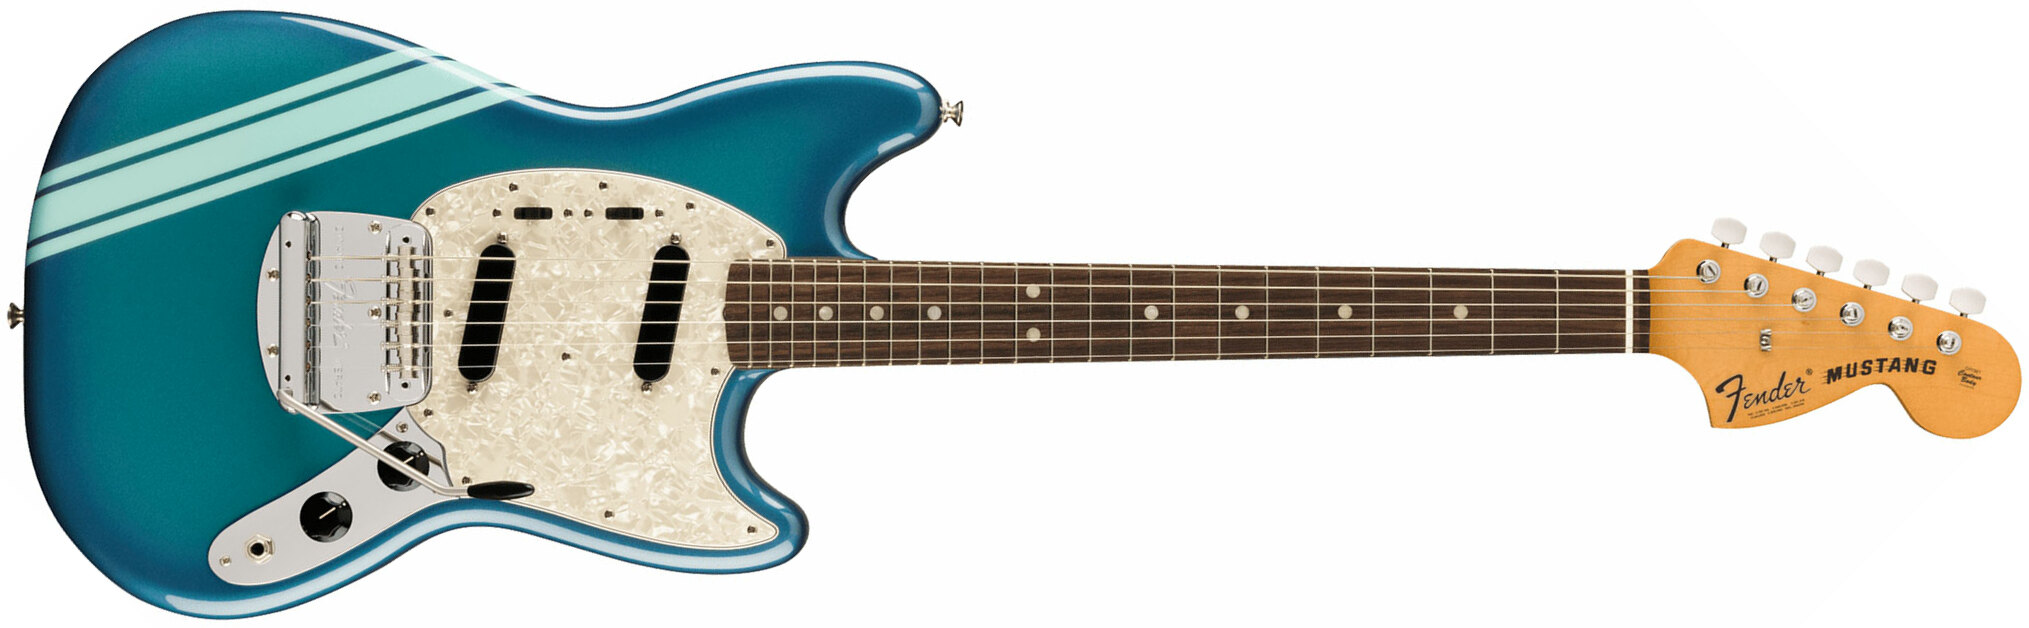 Fender Mustang 70s Competition Vintera 2 Mex 2s Trem Rw - Competition Blue - Retro-Rock-E-Gitarre - Main picture